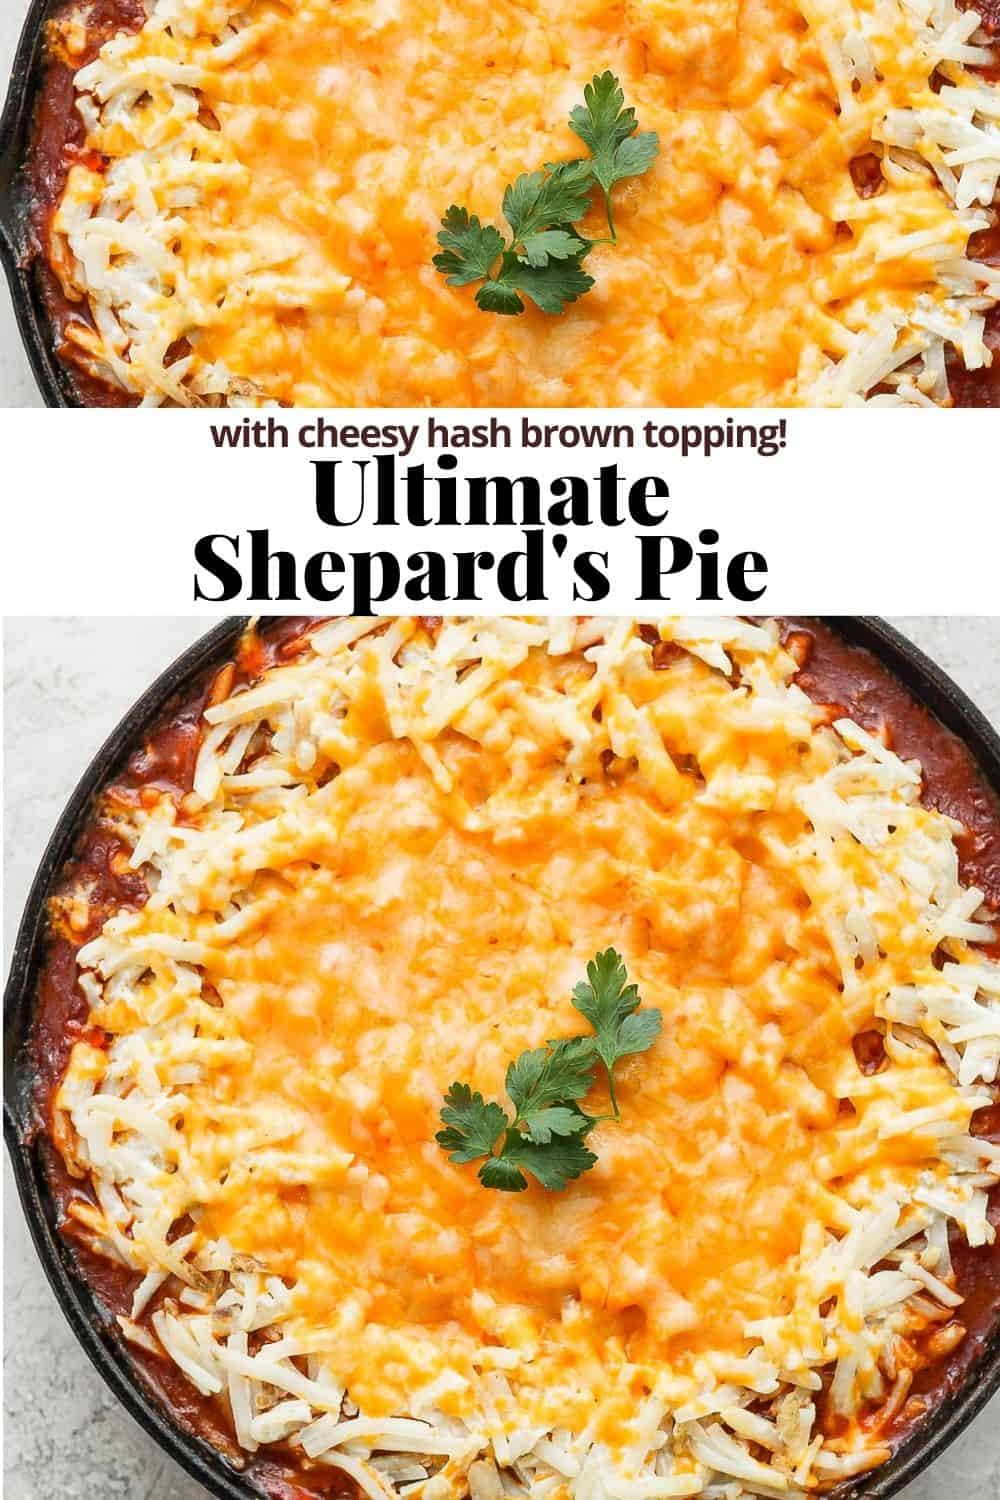 Pinterest image for the ultimate shepherd's pie.